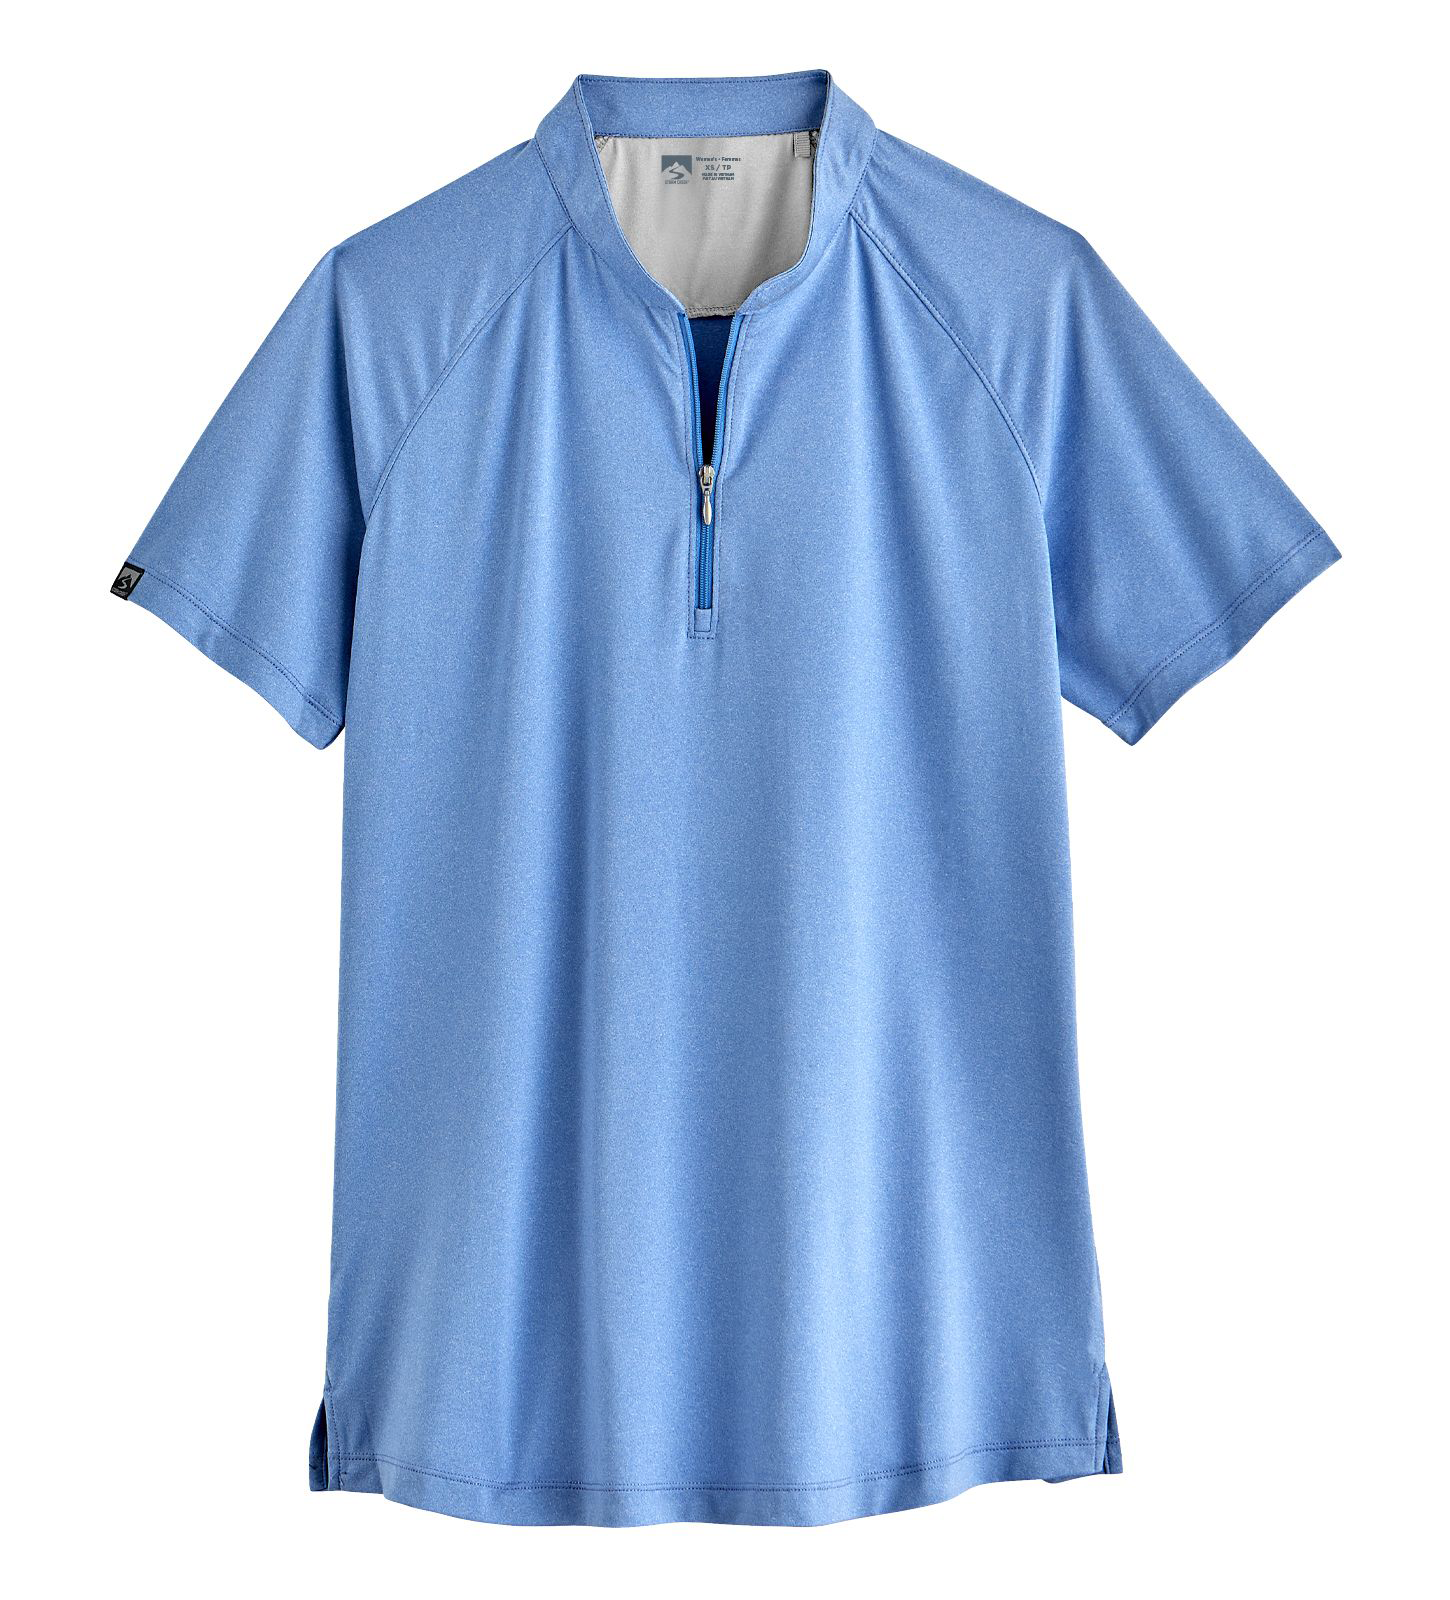 Storm Creek Visionary Polo Short-Sleeve Shirt for Ladies - Peri Blue - M